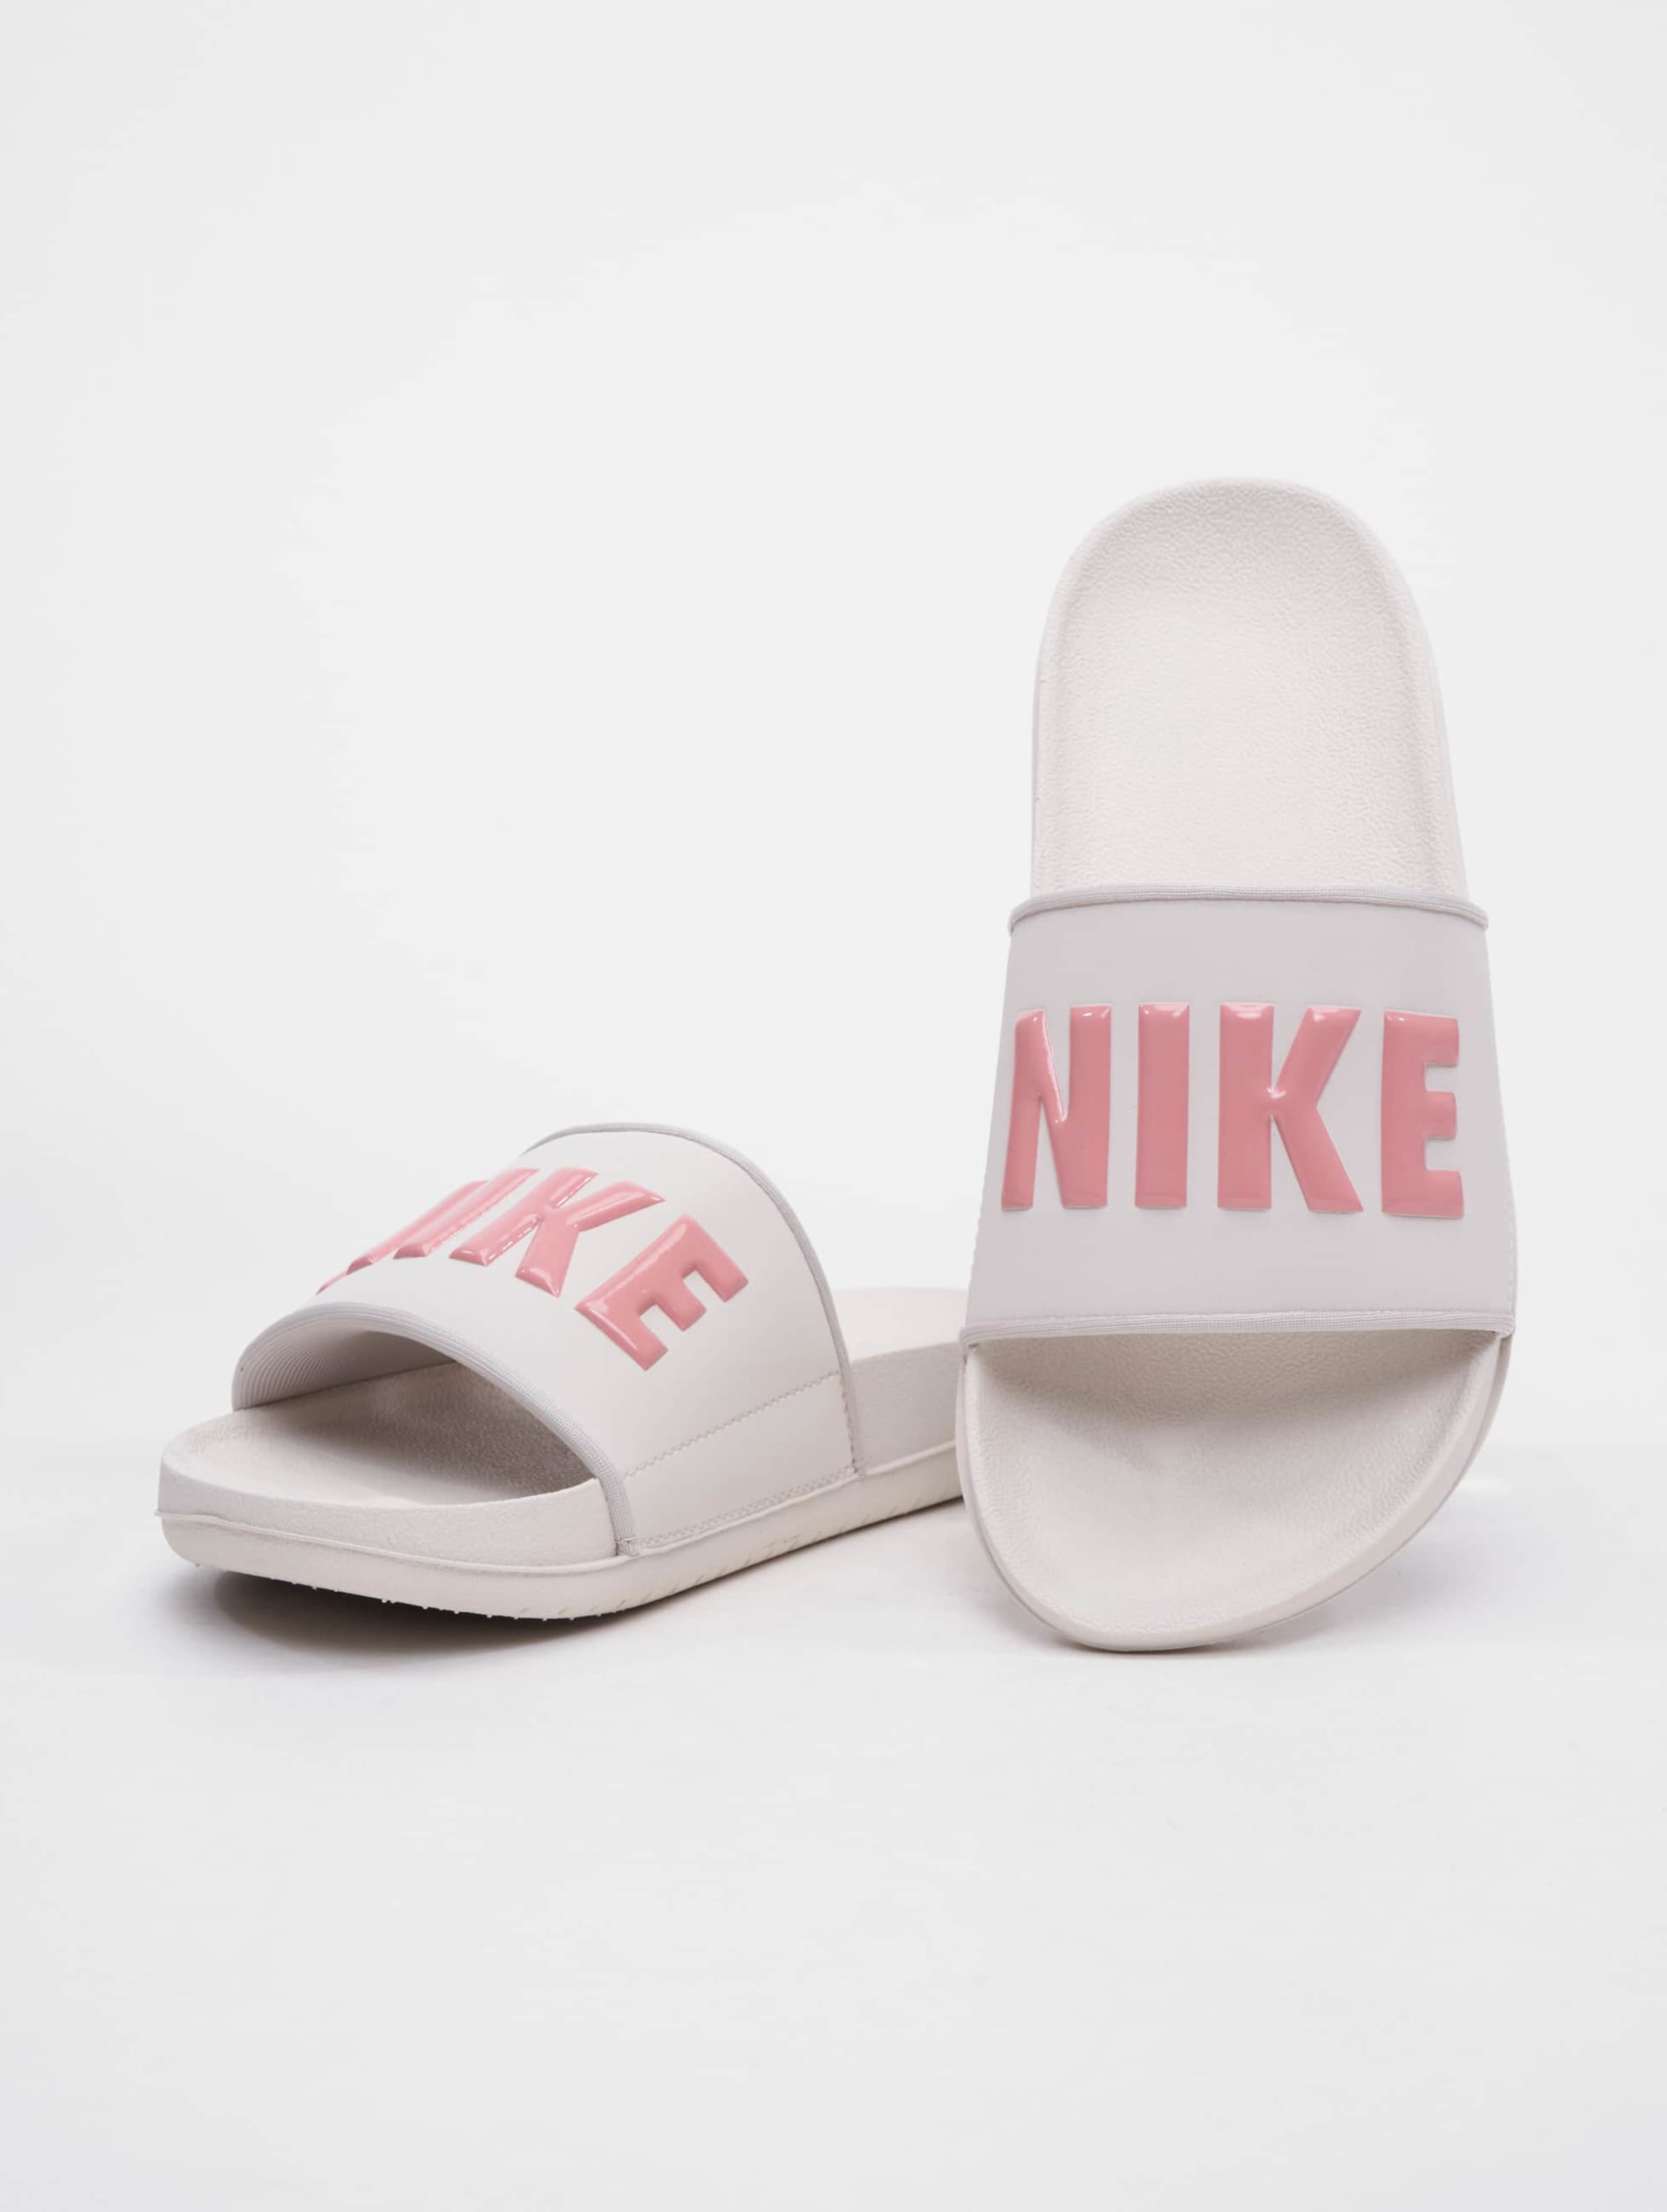 Shop Nike Sandals Original online | Lazada.com.ph